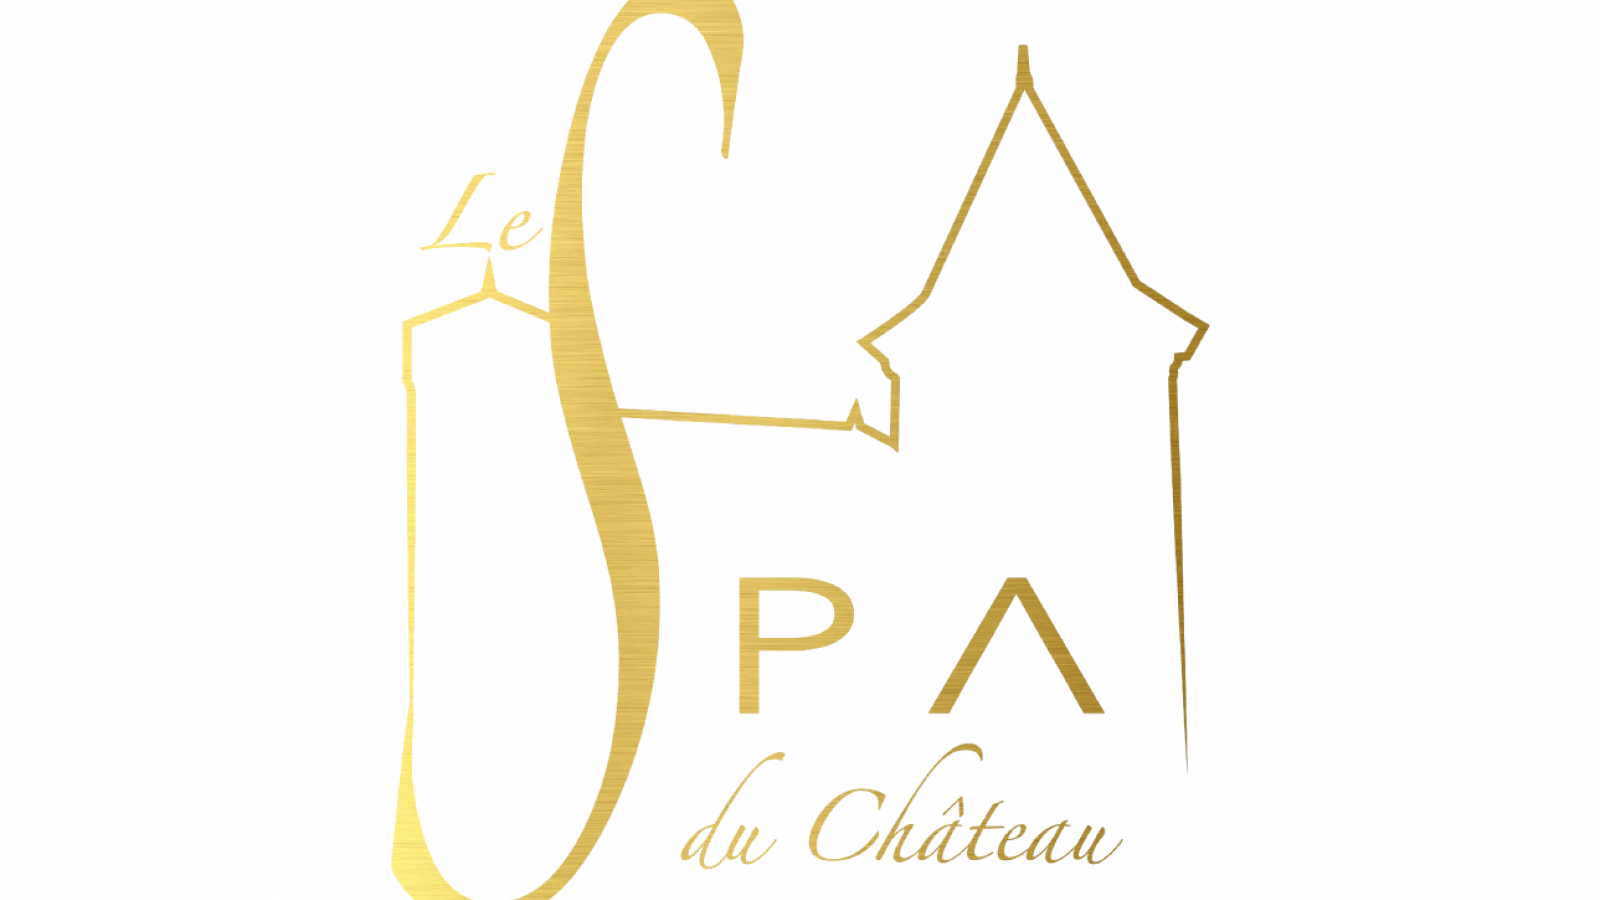 Le Spa du Château - Chapeau Cornu